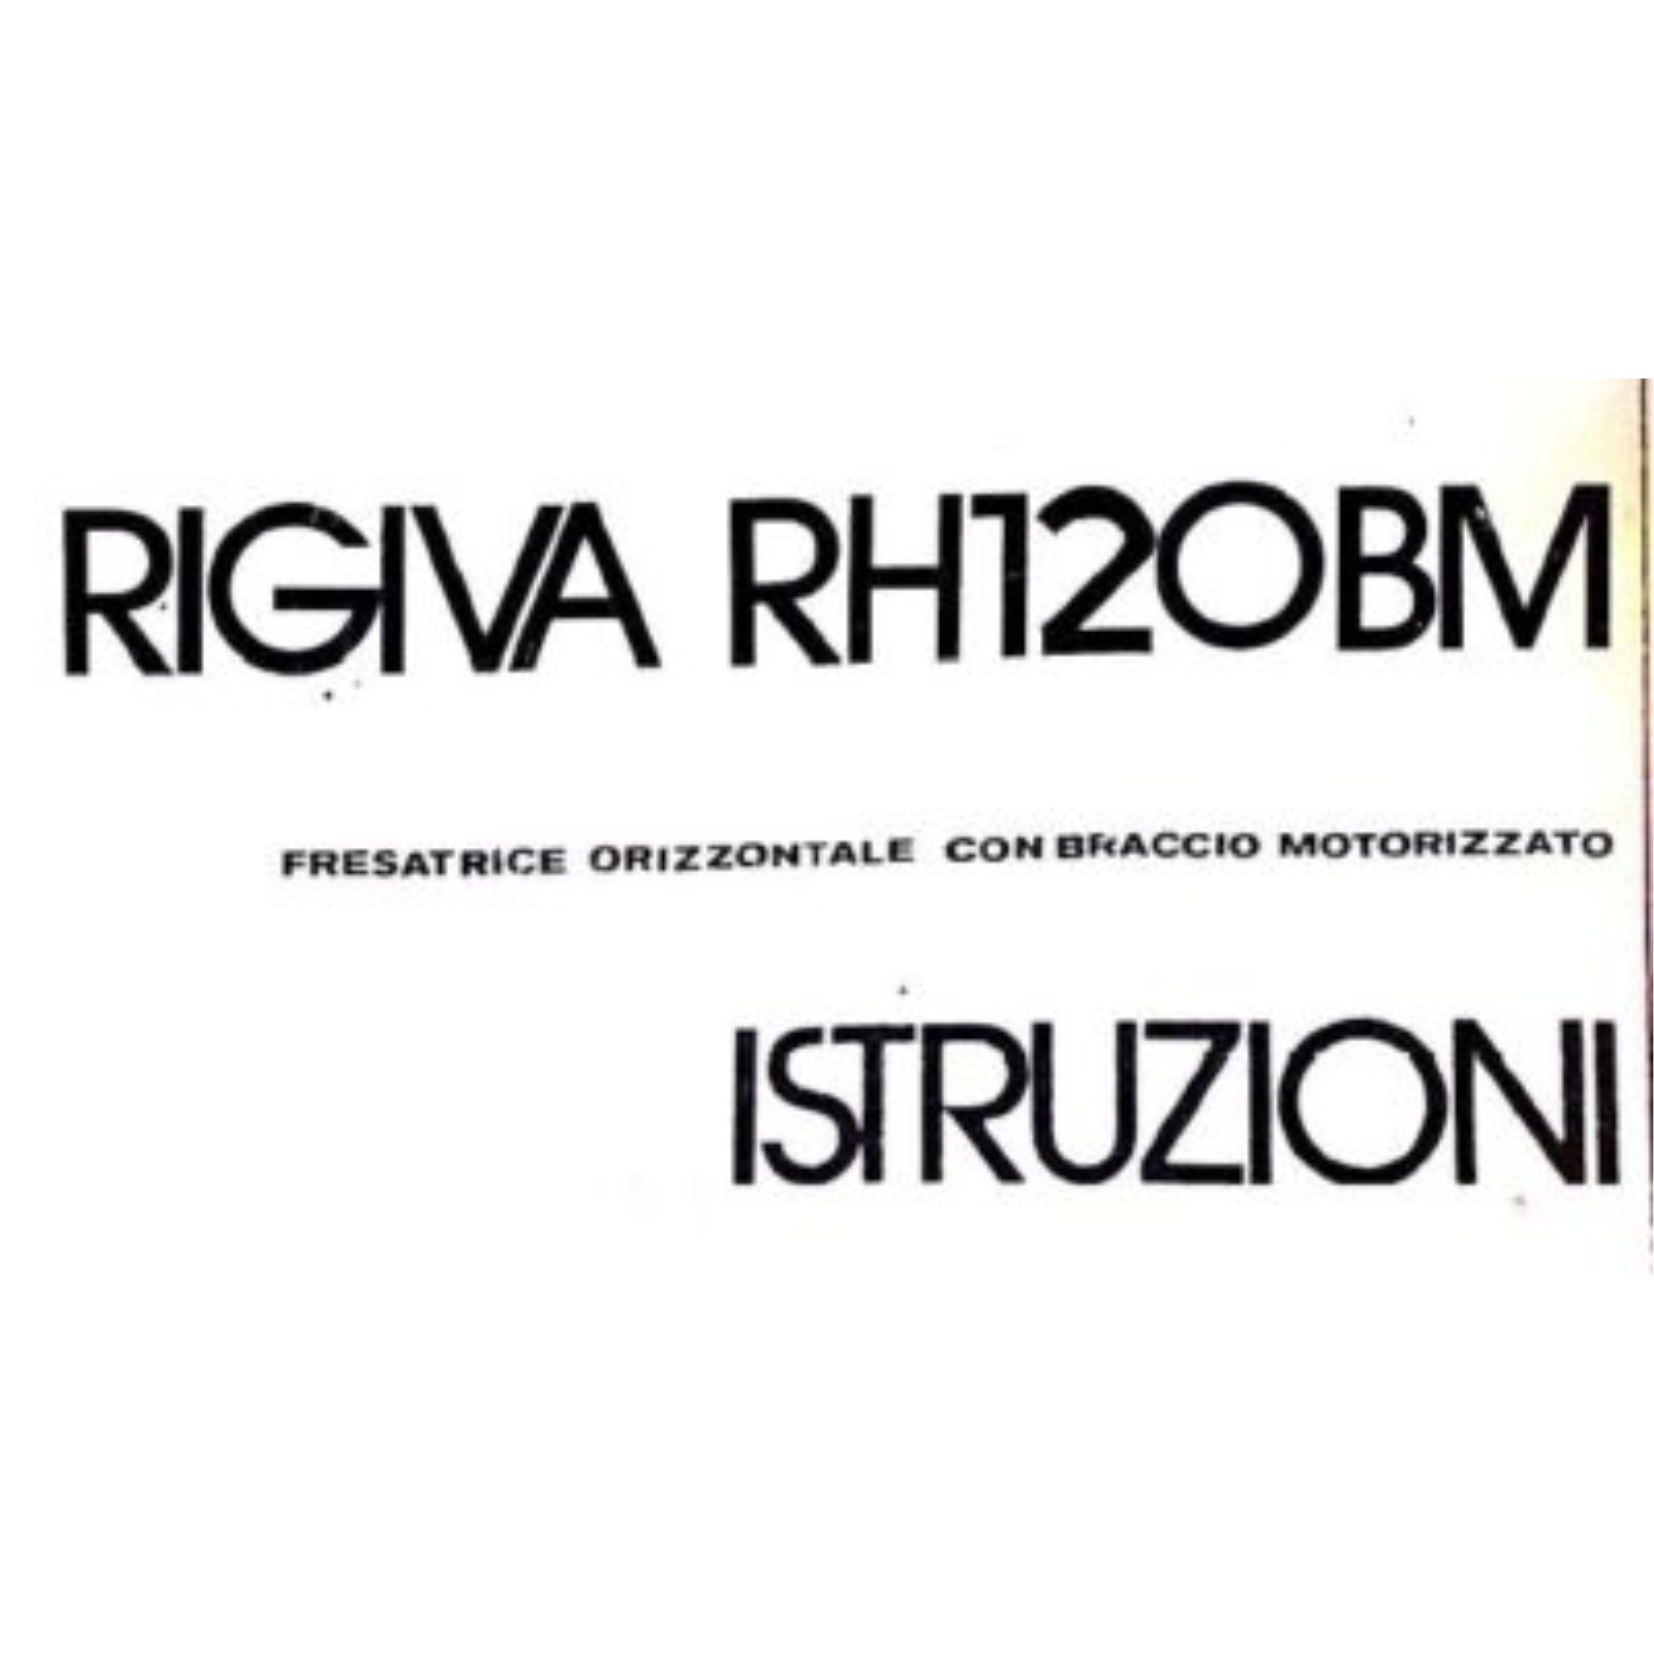 Manuale Fresatrice Rigiva rh120b